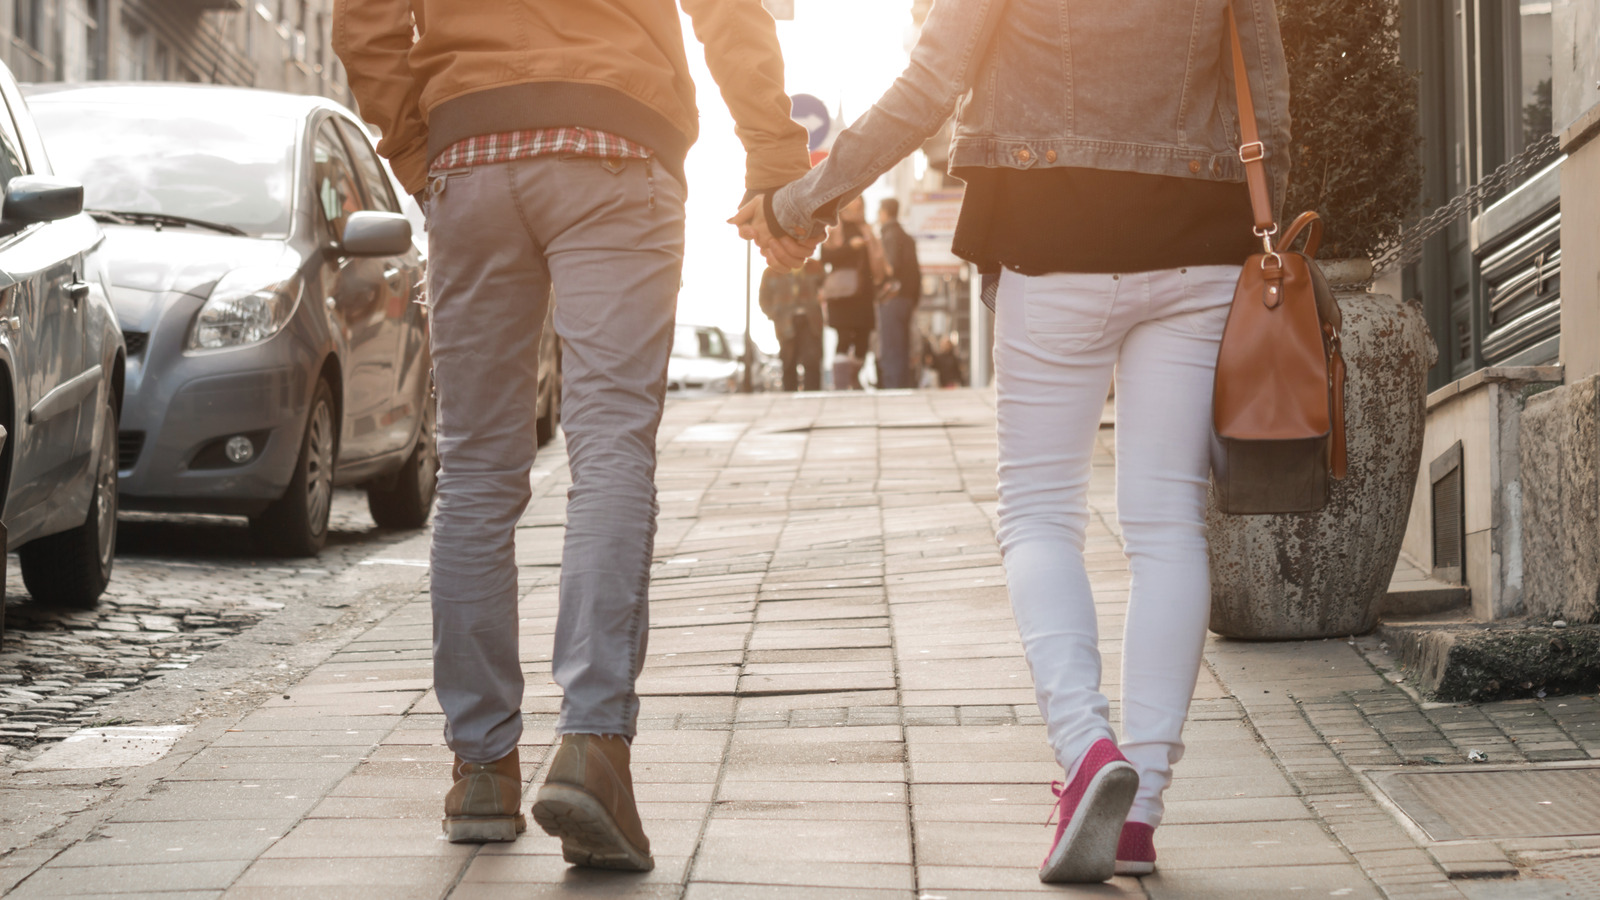 The Chivalrous ‘Sidewalk Rule’ Has A Gross, Medieval Origin – Grunge